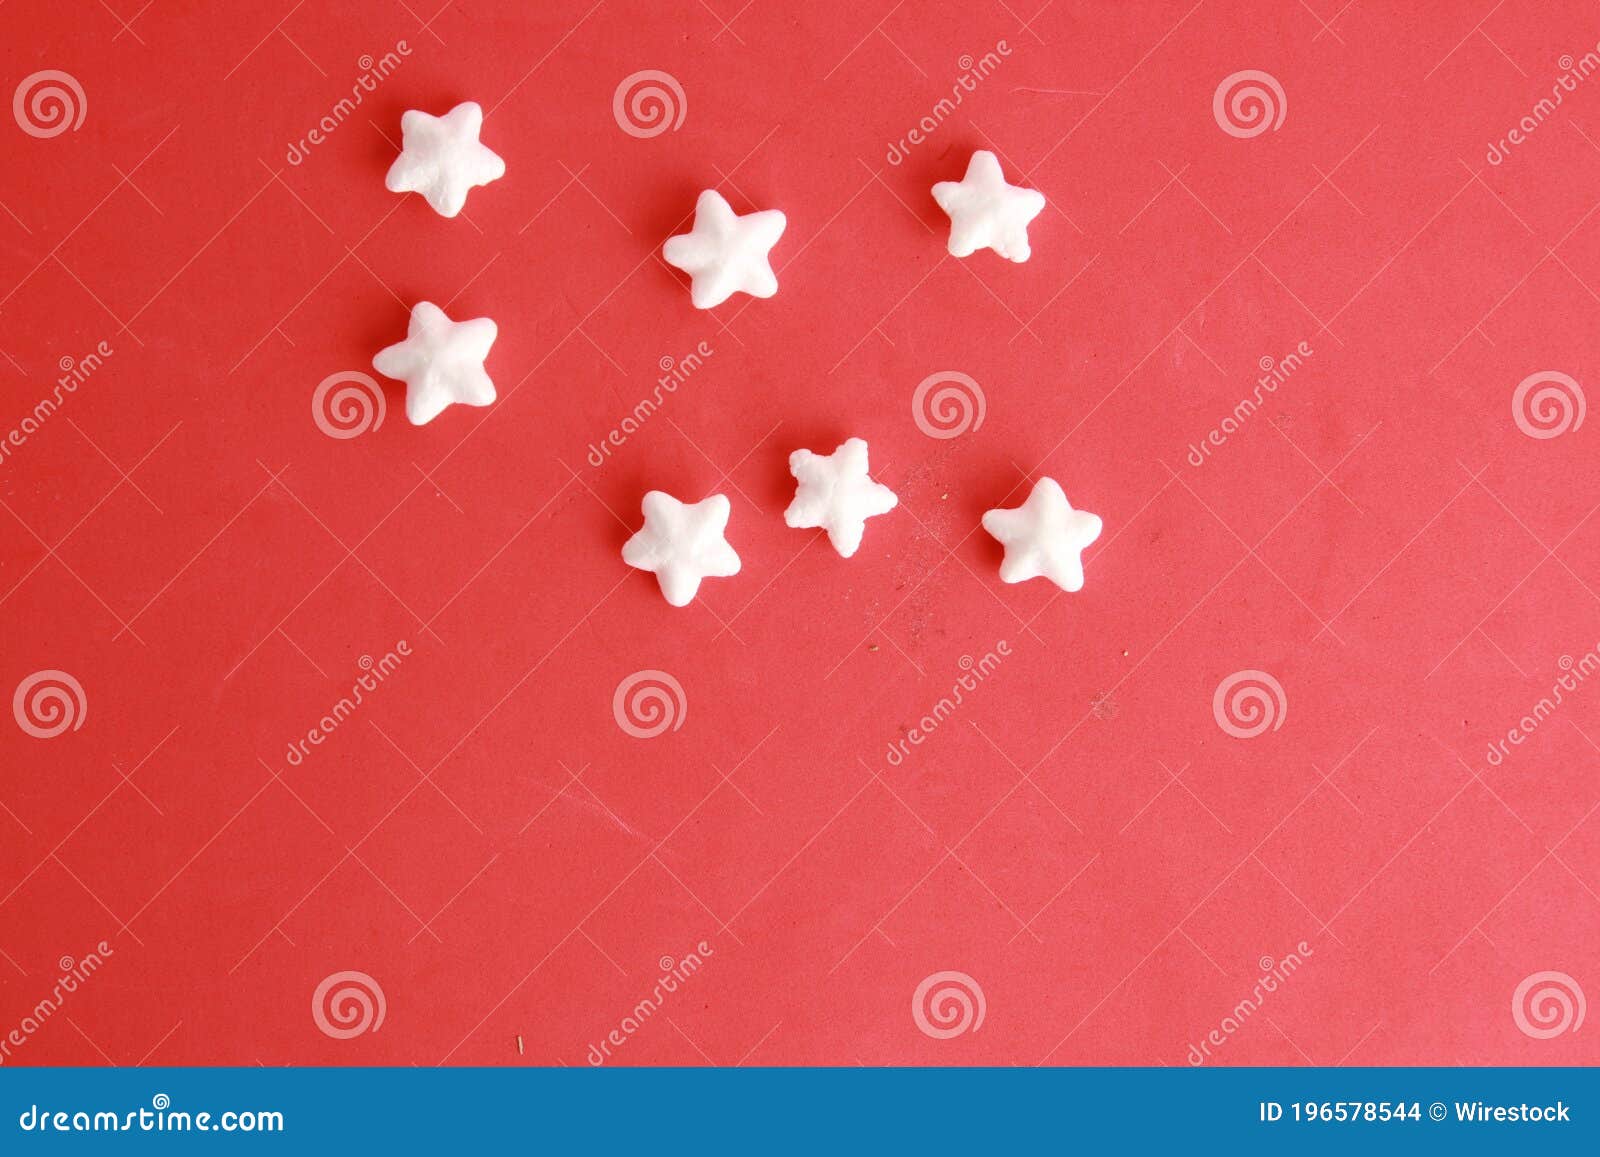 decorative stars, made with porexpan